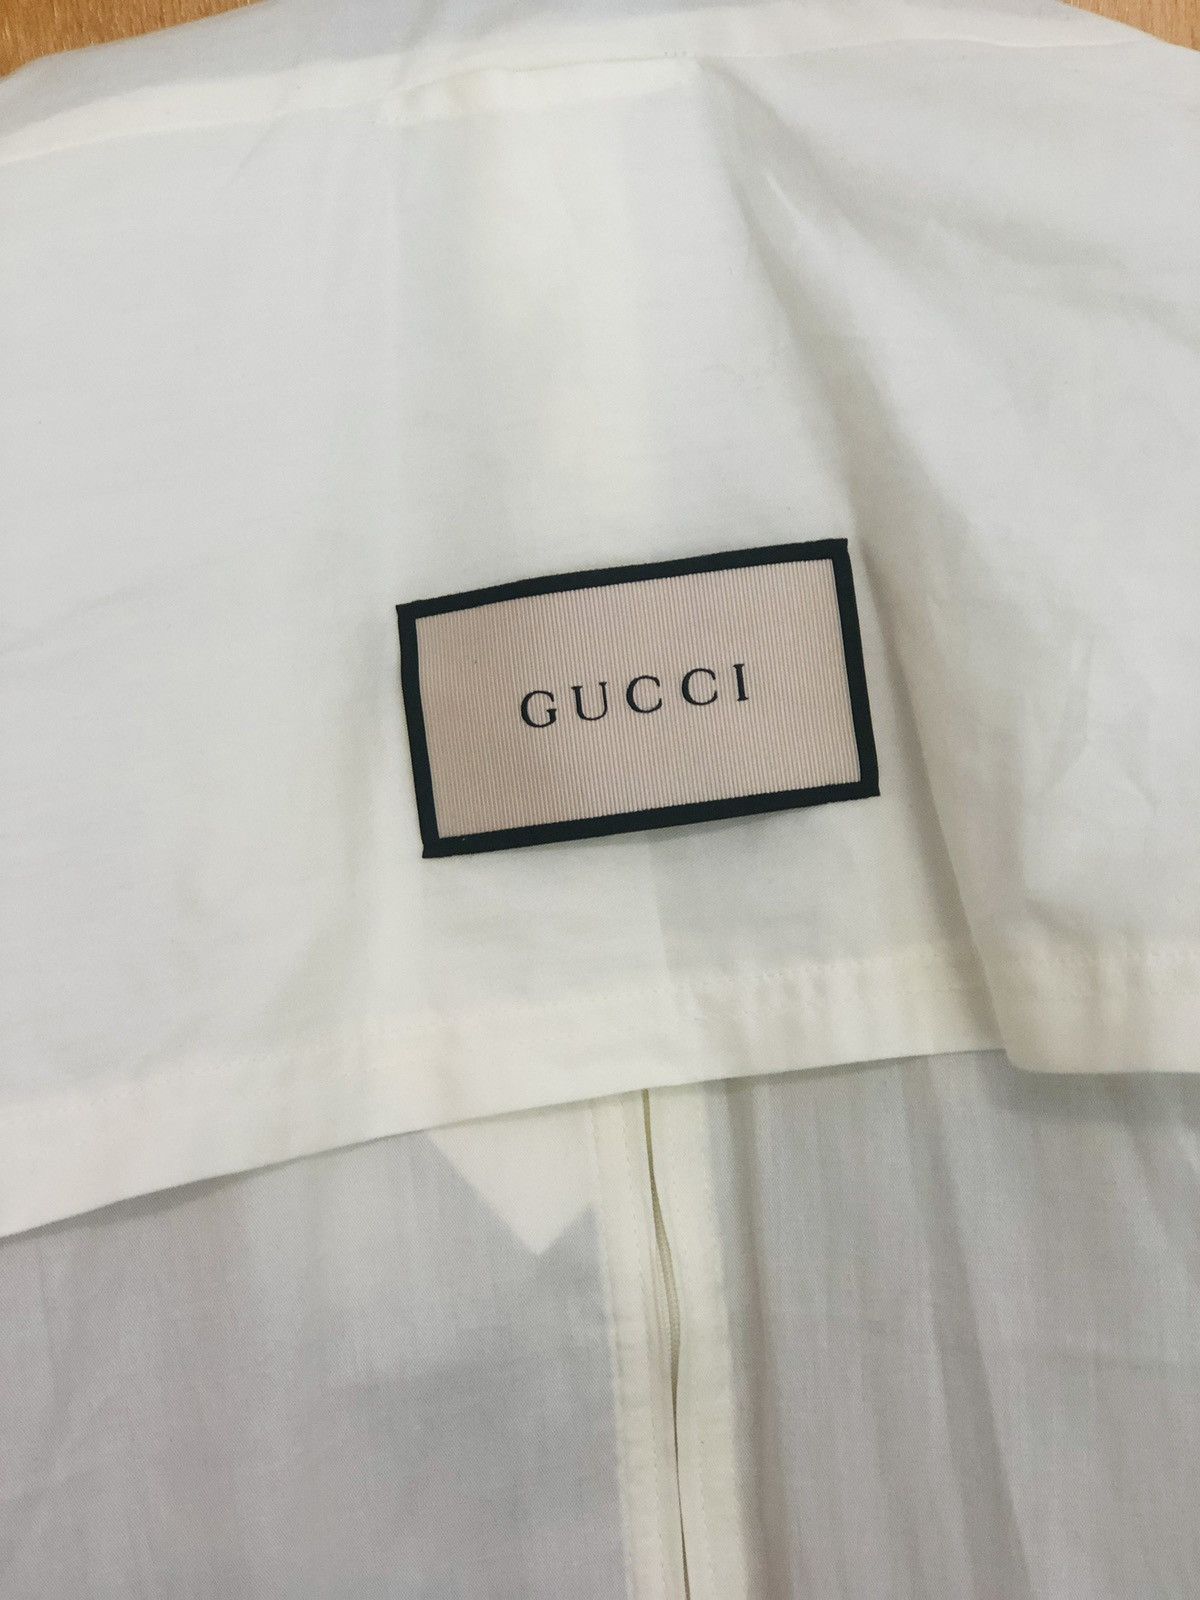 Gucci Blind For Love Varsity Bomber Jacket Size US S / EU 44-46 / 1 - 7 Thumbnail